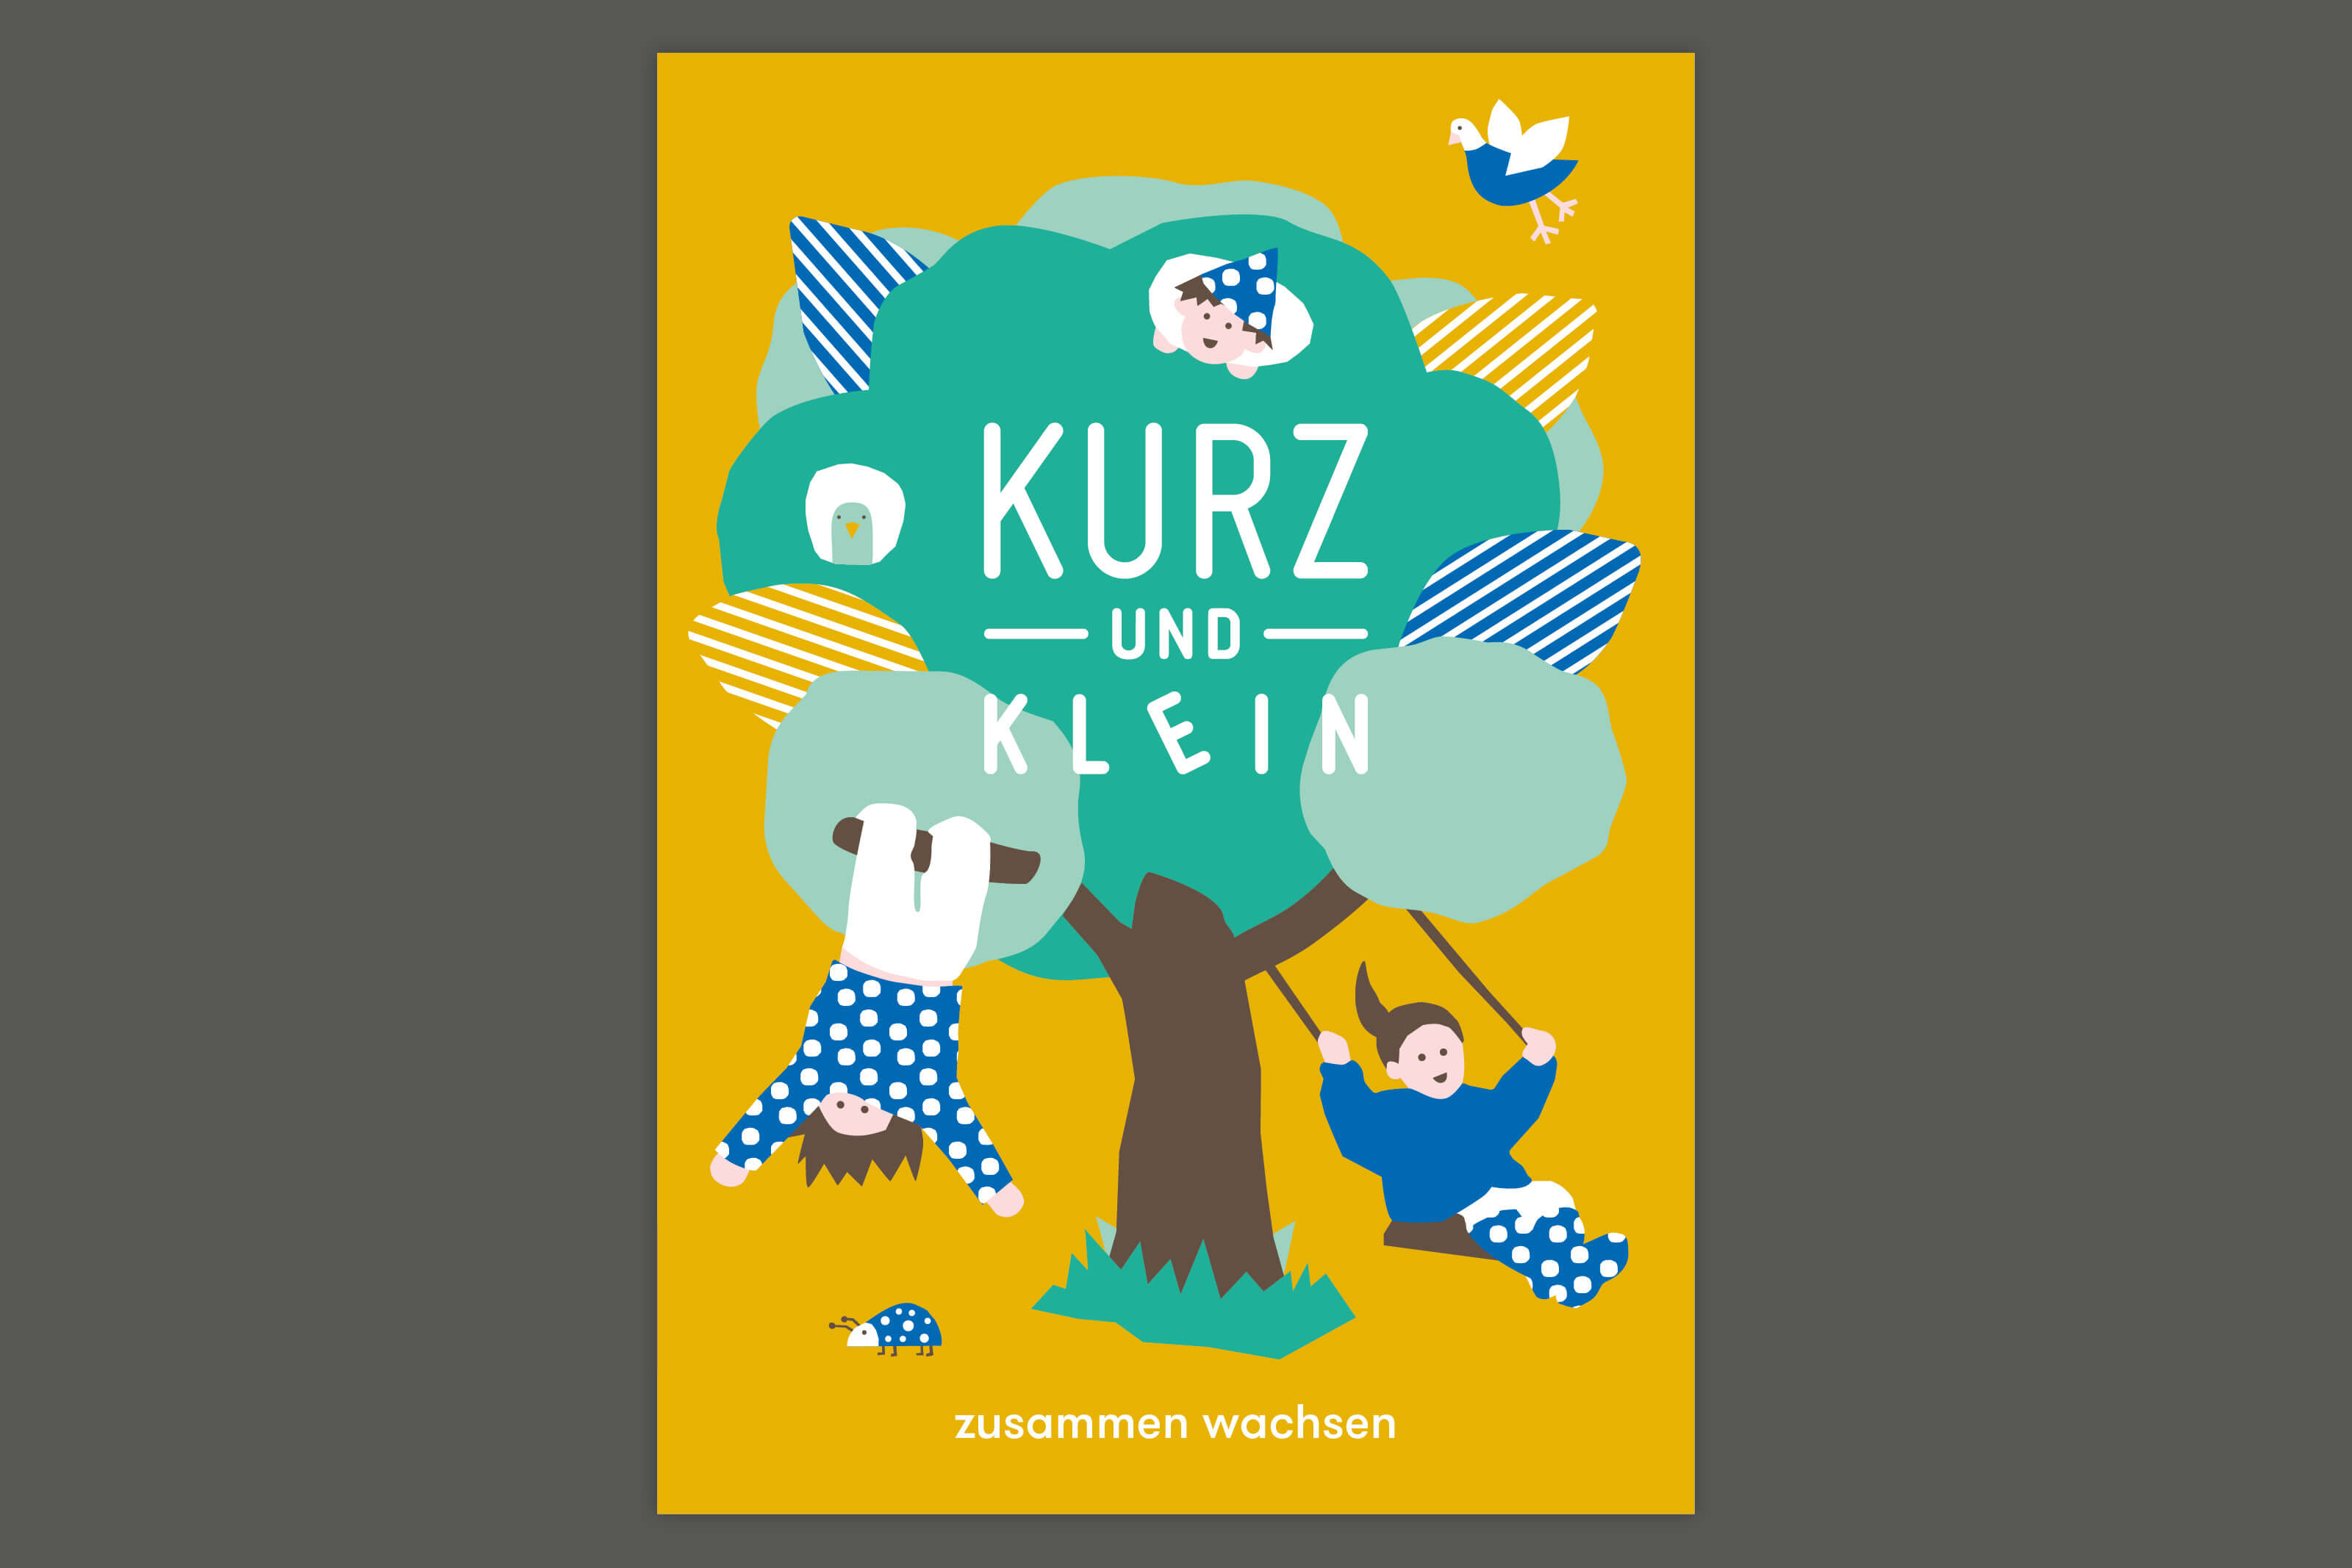 Illustration on a poster for the kids store Kurz und Klein